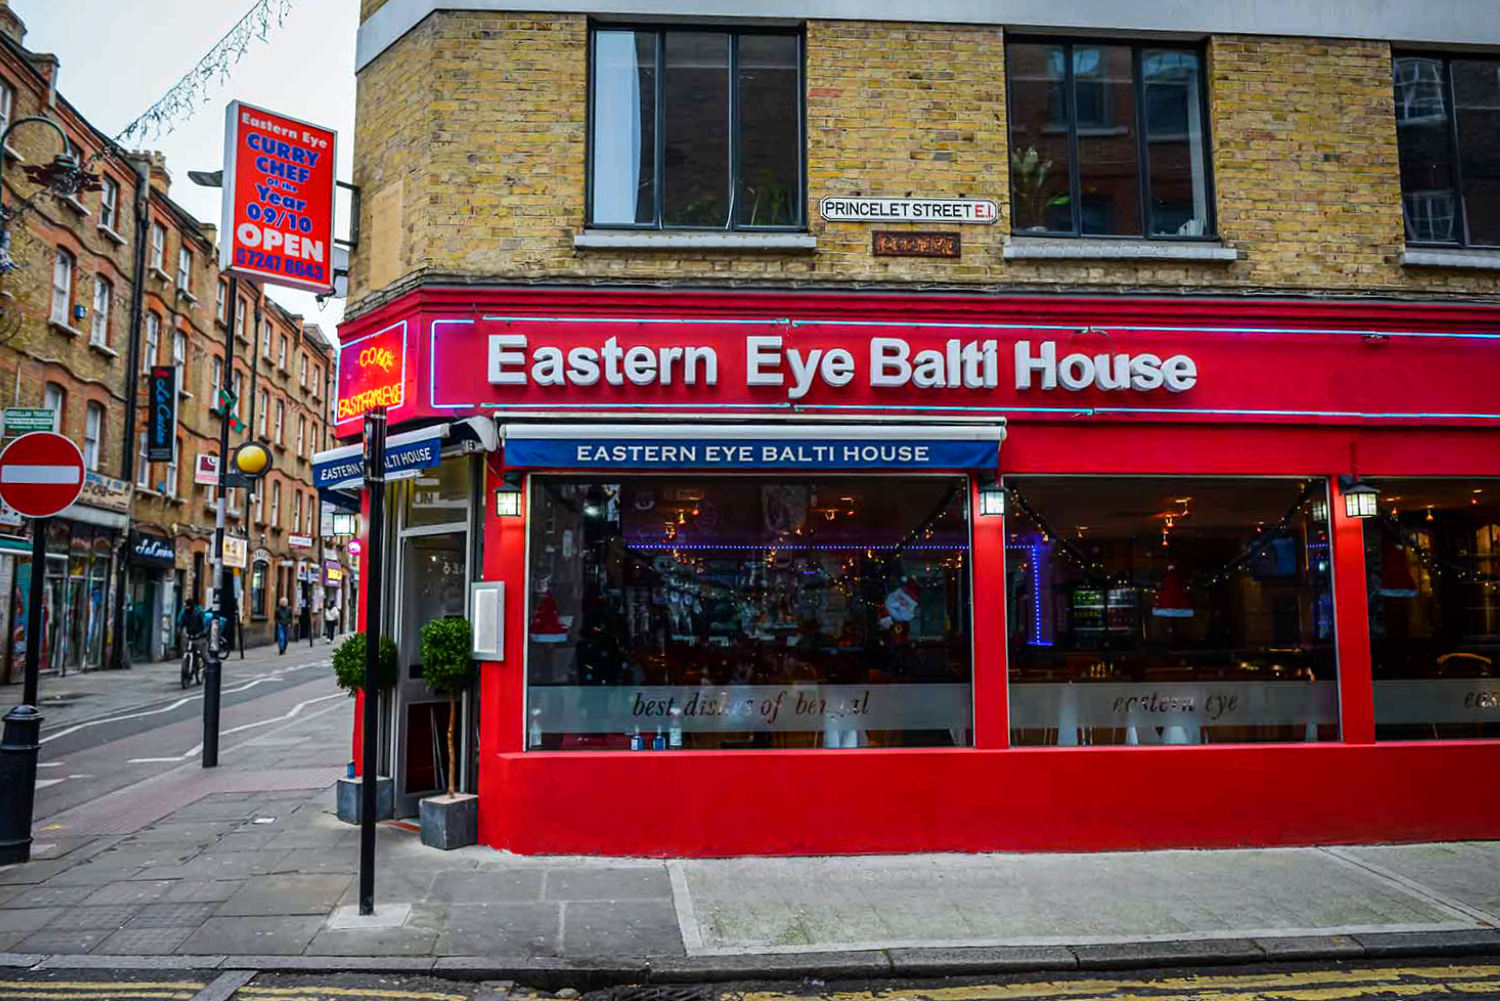 Easter Eye Balti House restaurant, Brick Lane, East End of London.